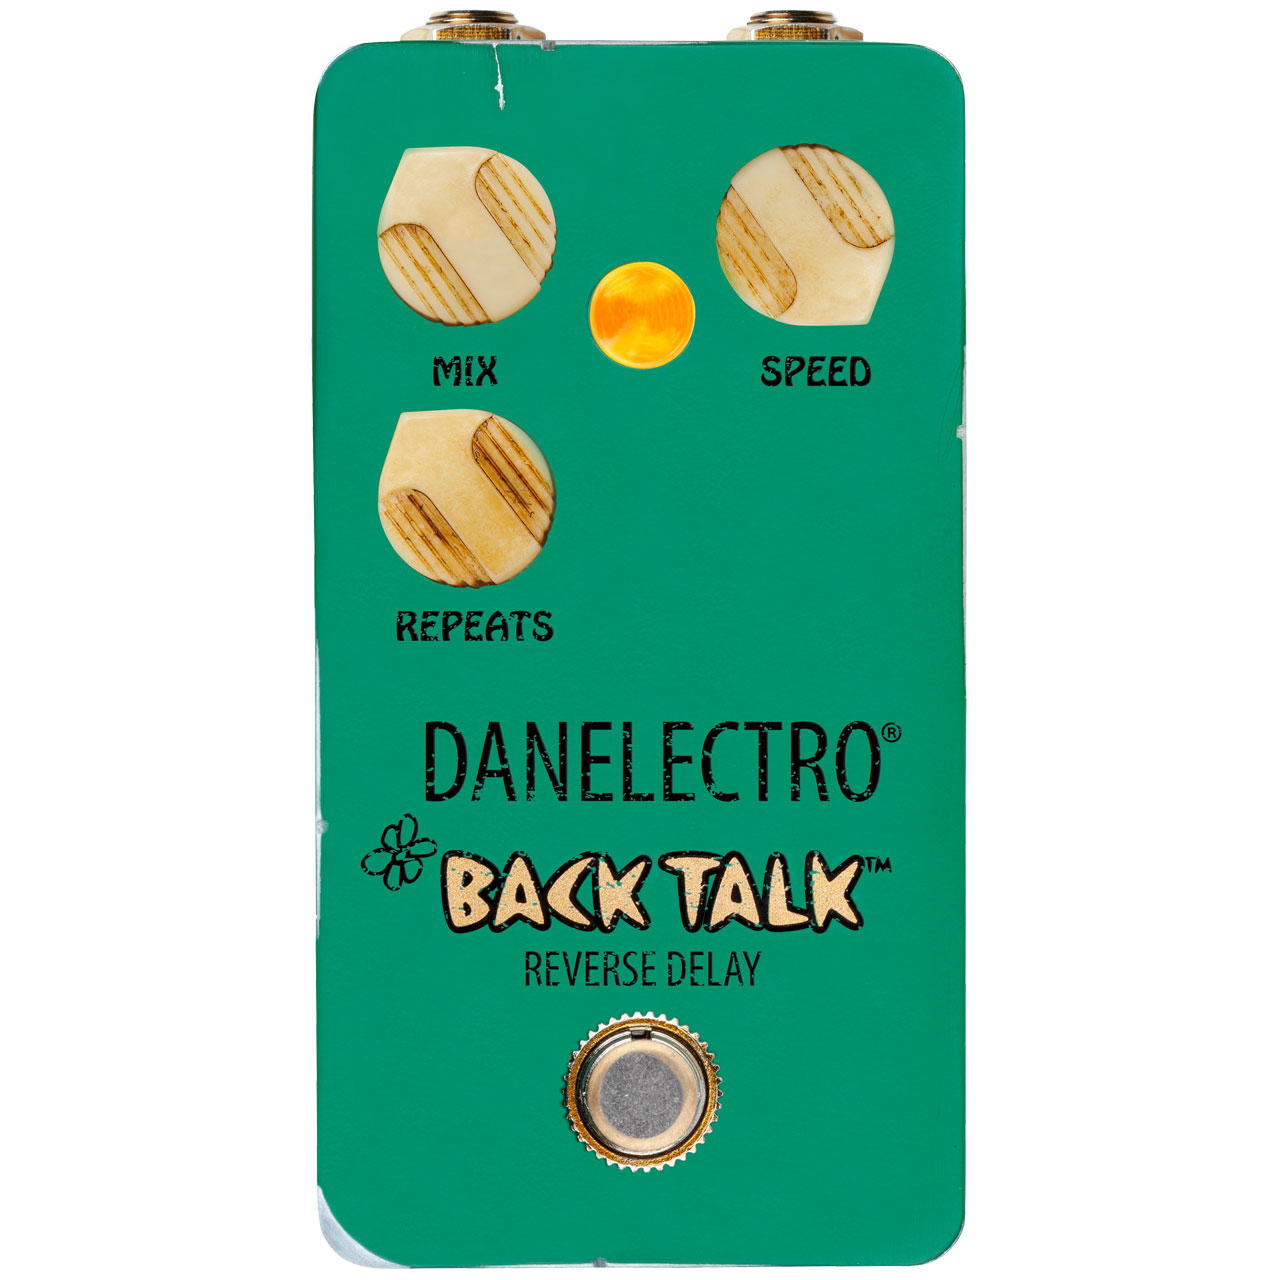 Danelectro Back Talk Reverse Delay | MUSIC STORE professional